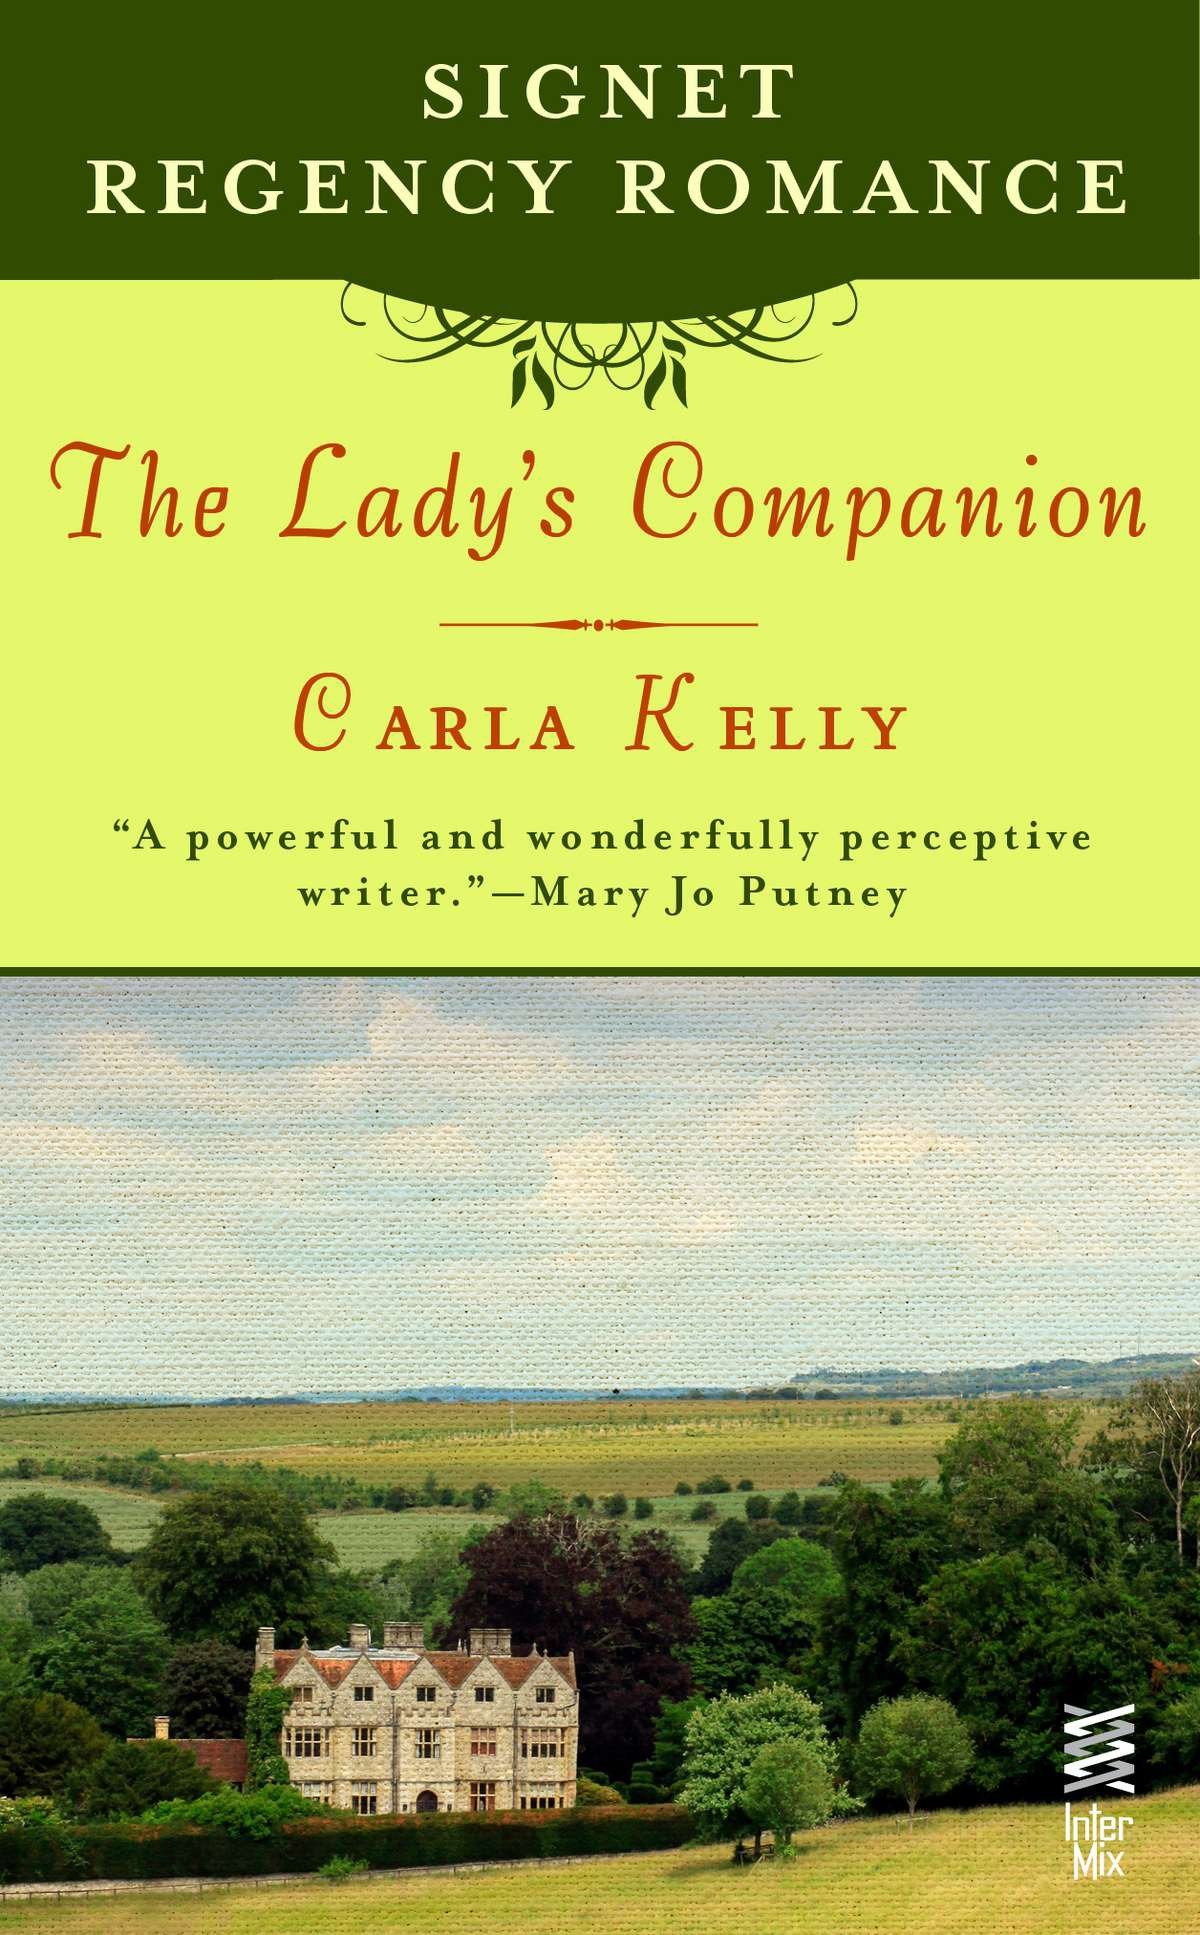 The Lady's Companion Signet Regency Romance (InterMix) cover image